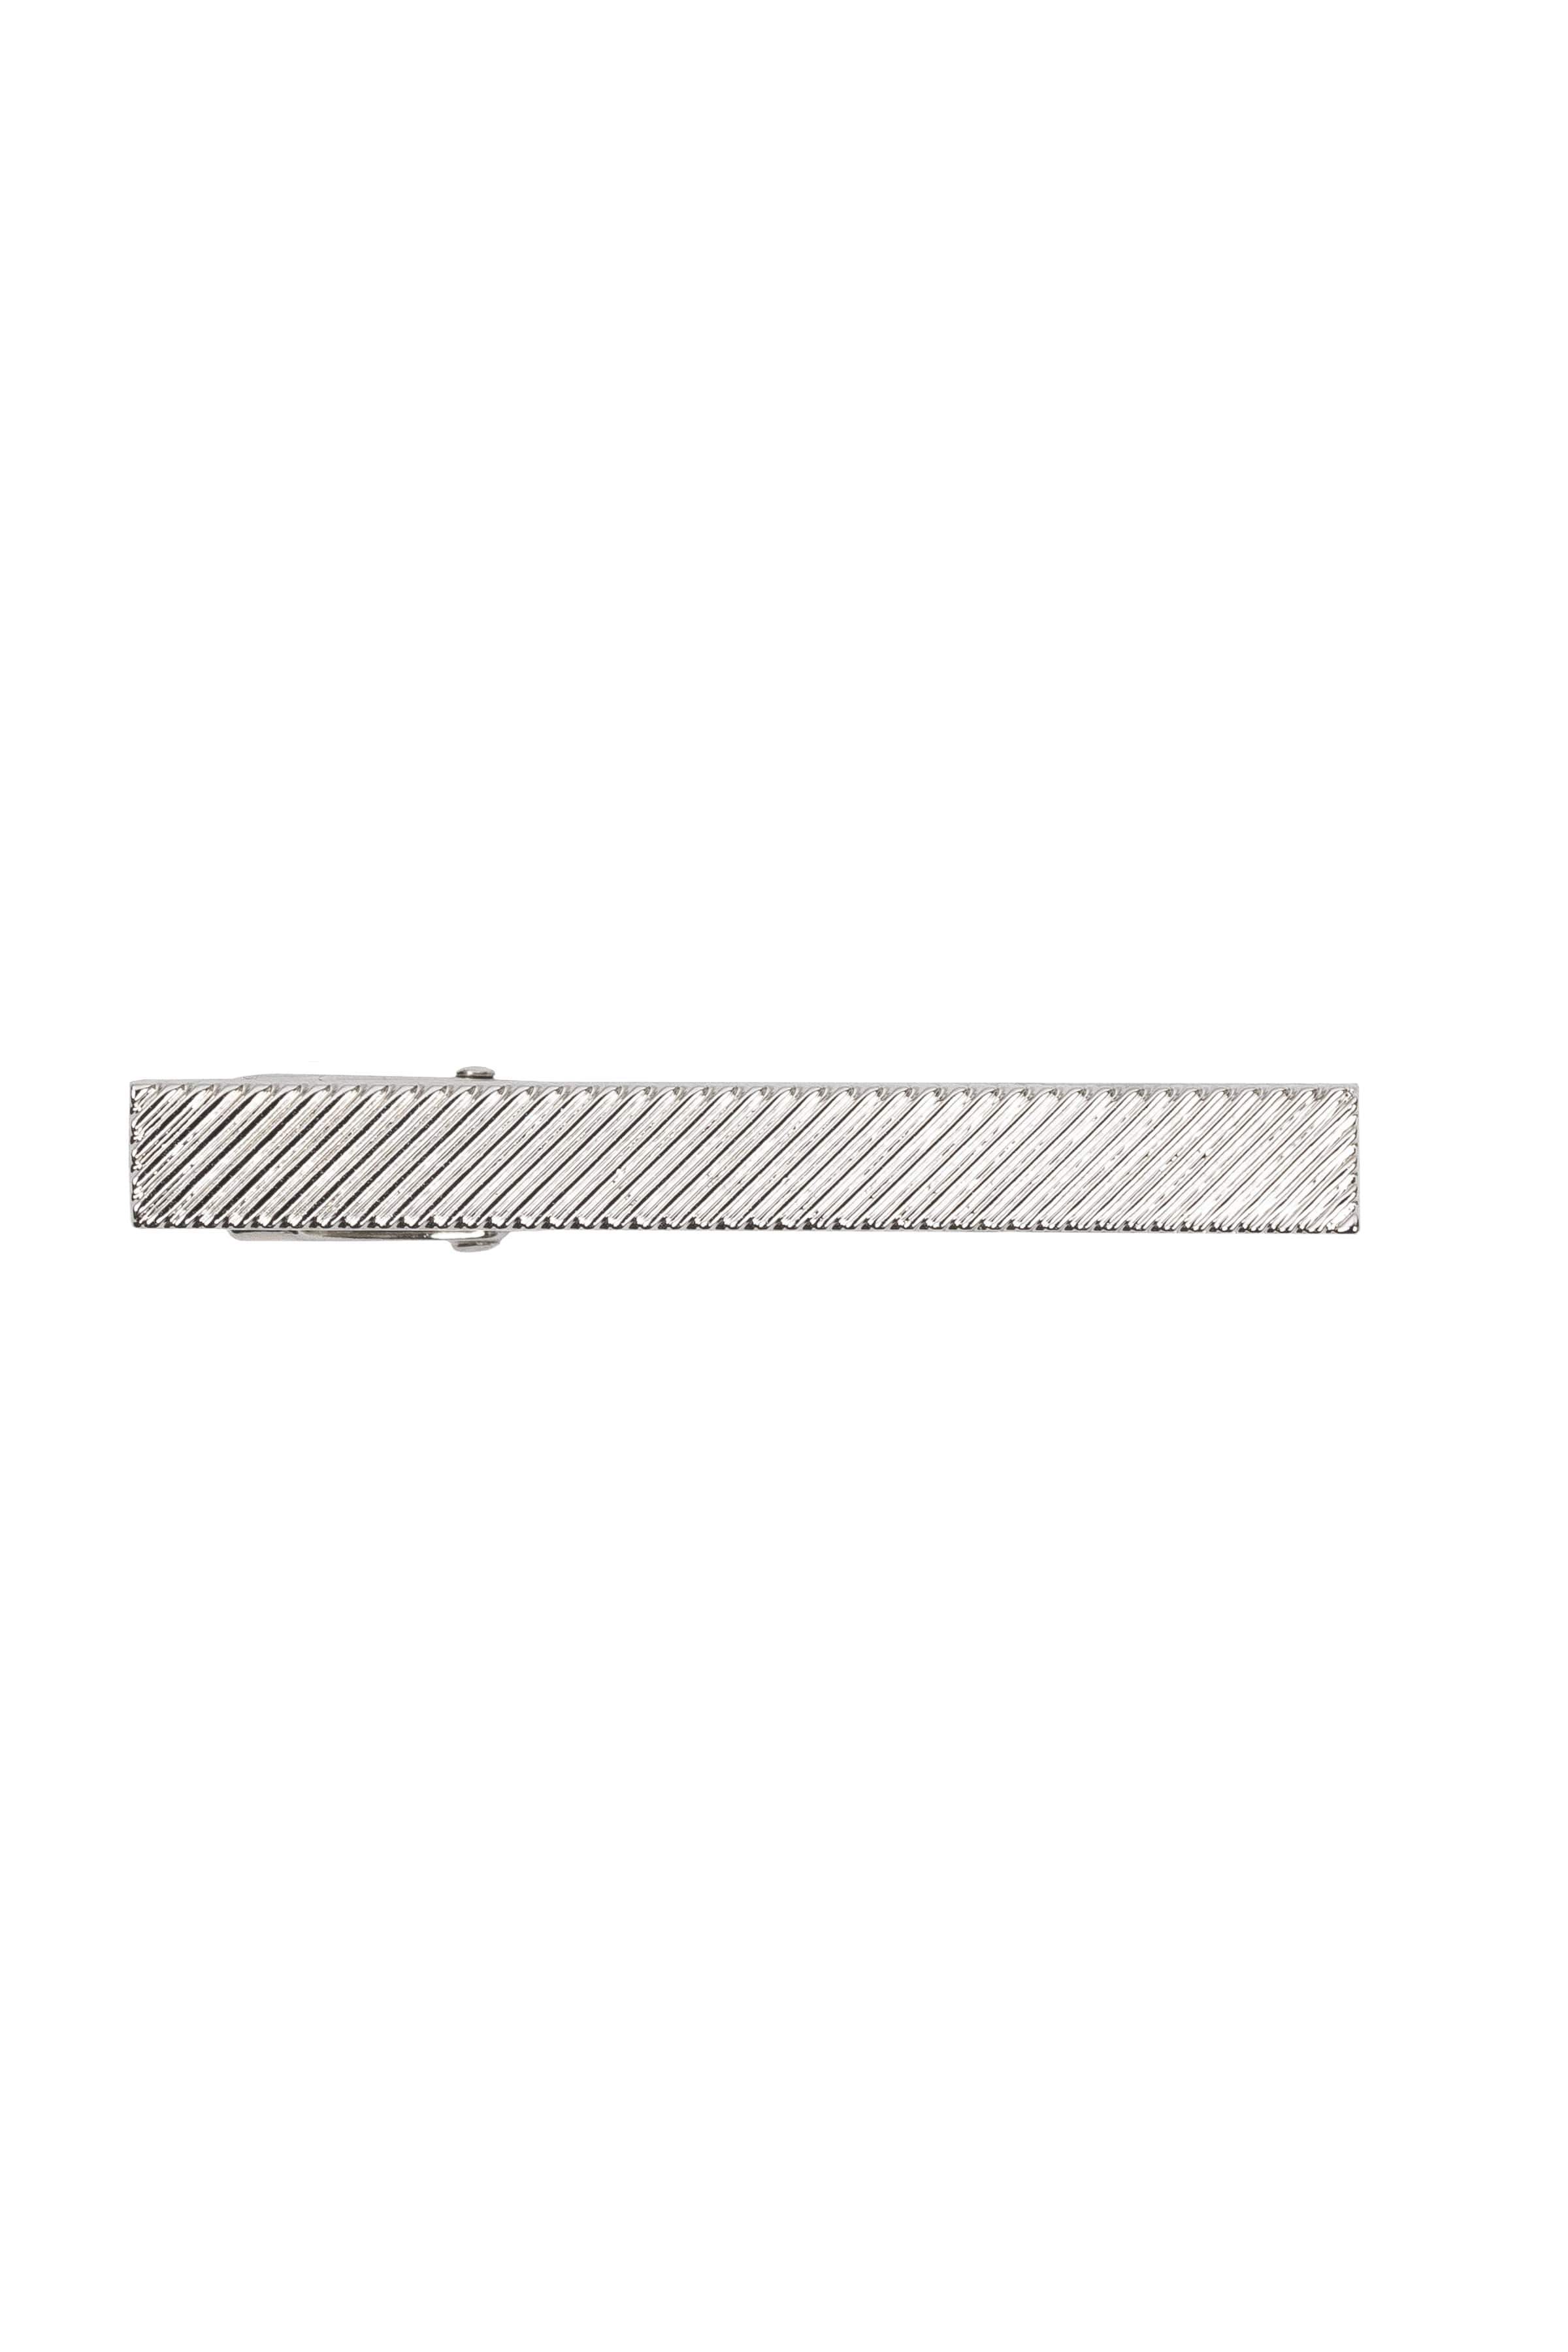 An ivy Slipsenål Engraved Silver Bar 5 cm